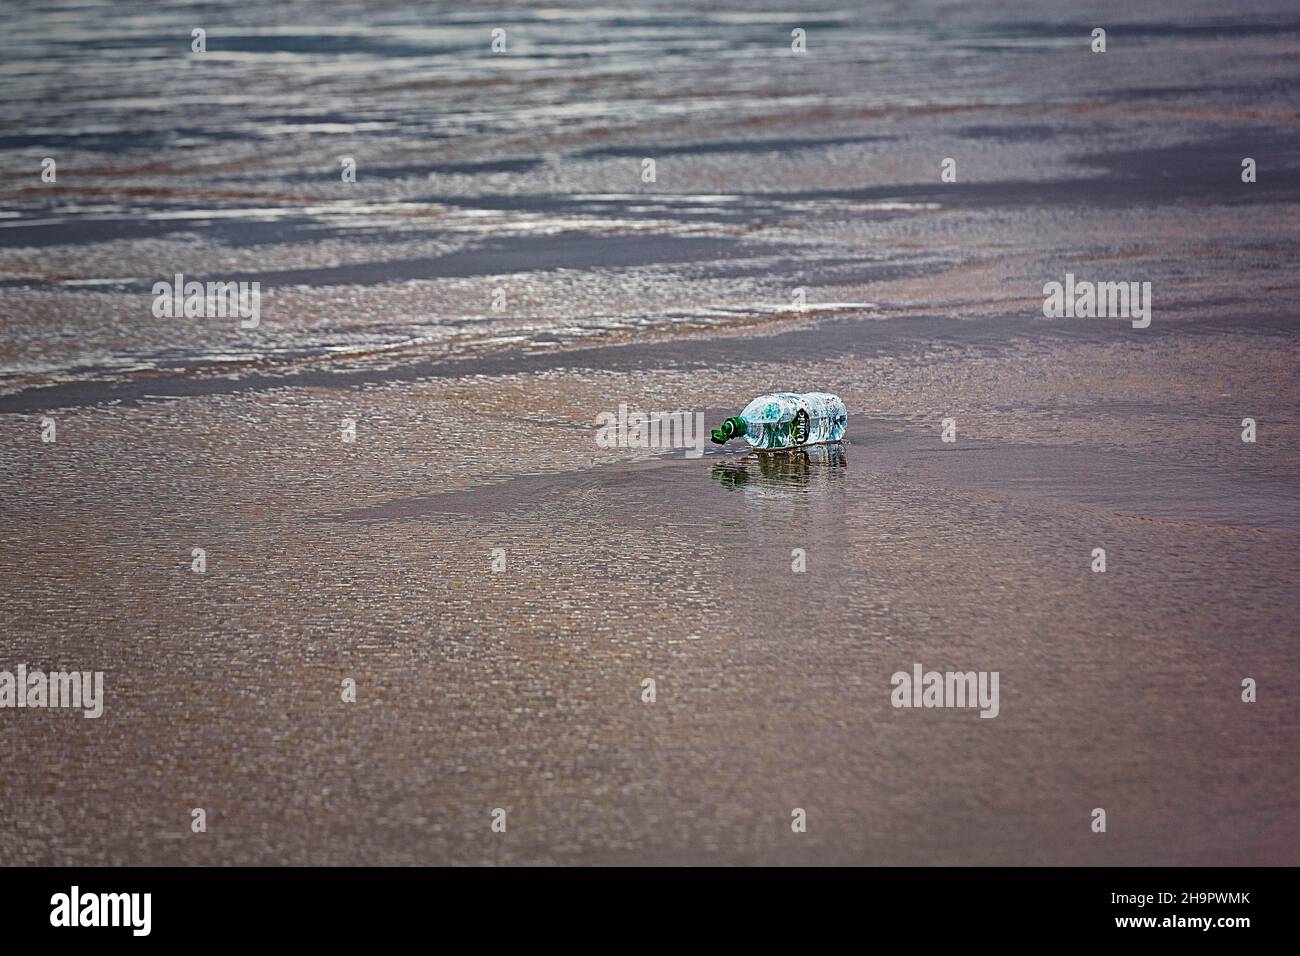 Plastic bottle, Volvic brand water bottle lying on the beach, plastic waste, marine pollution, Ireland Stock Photo